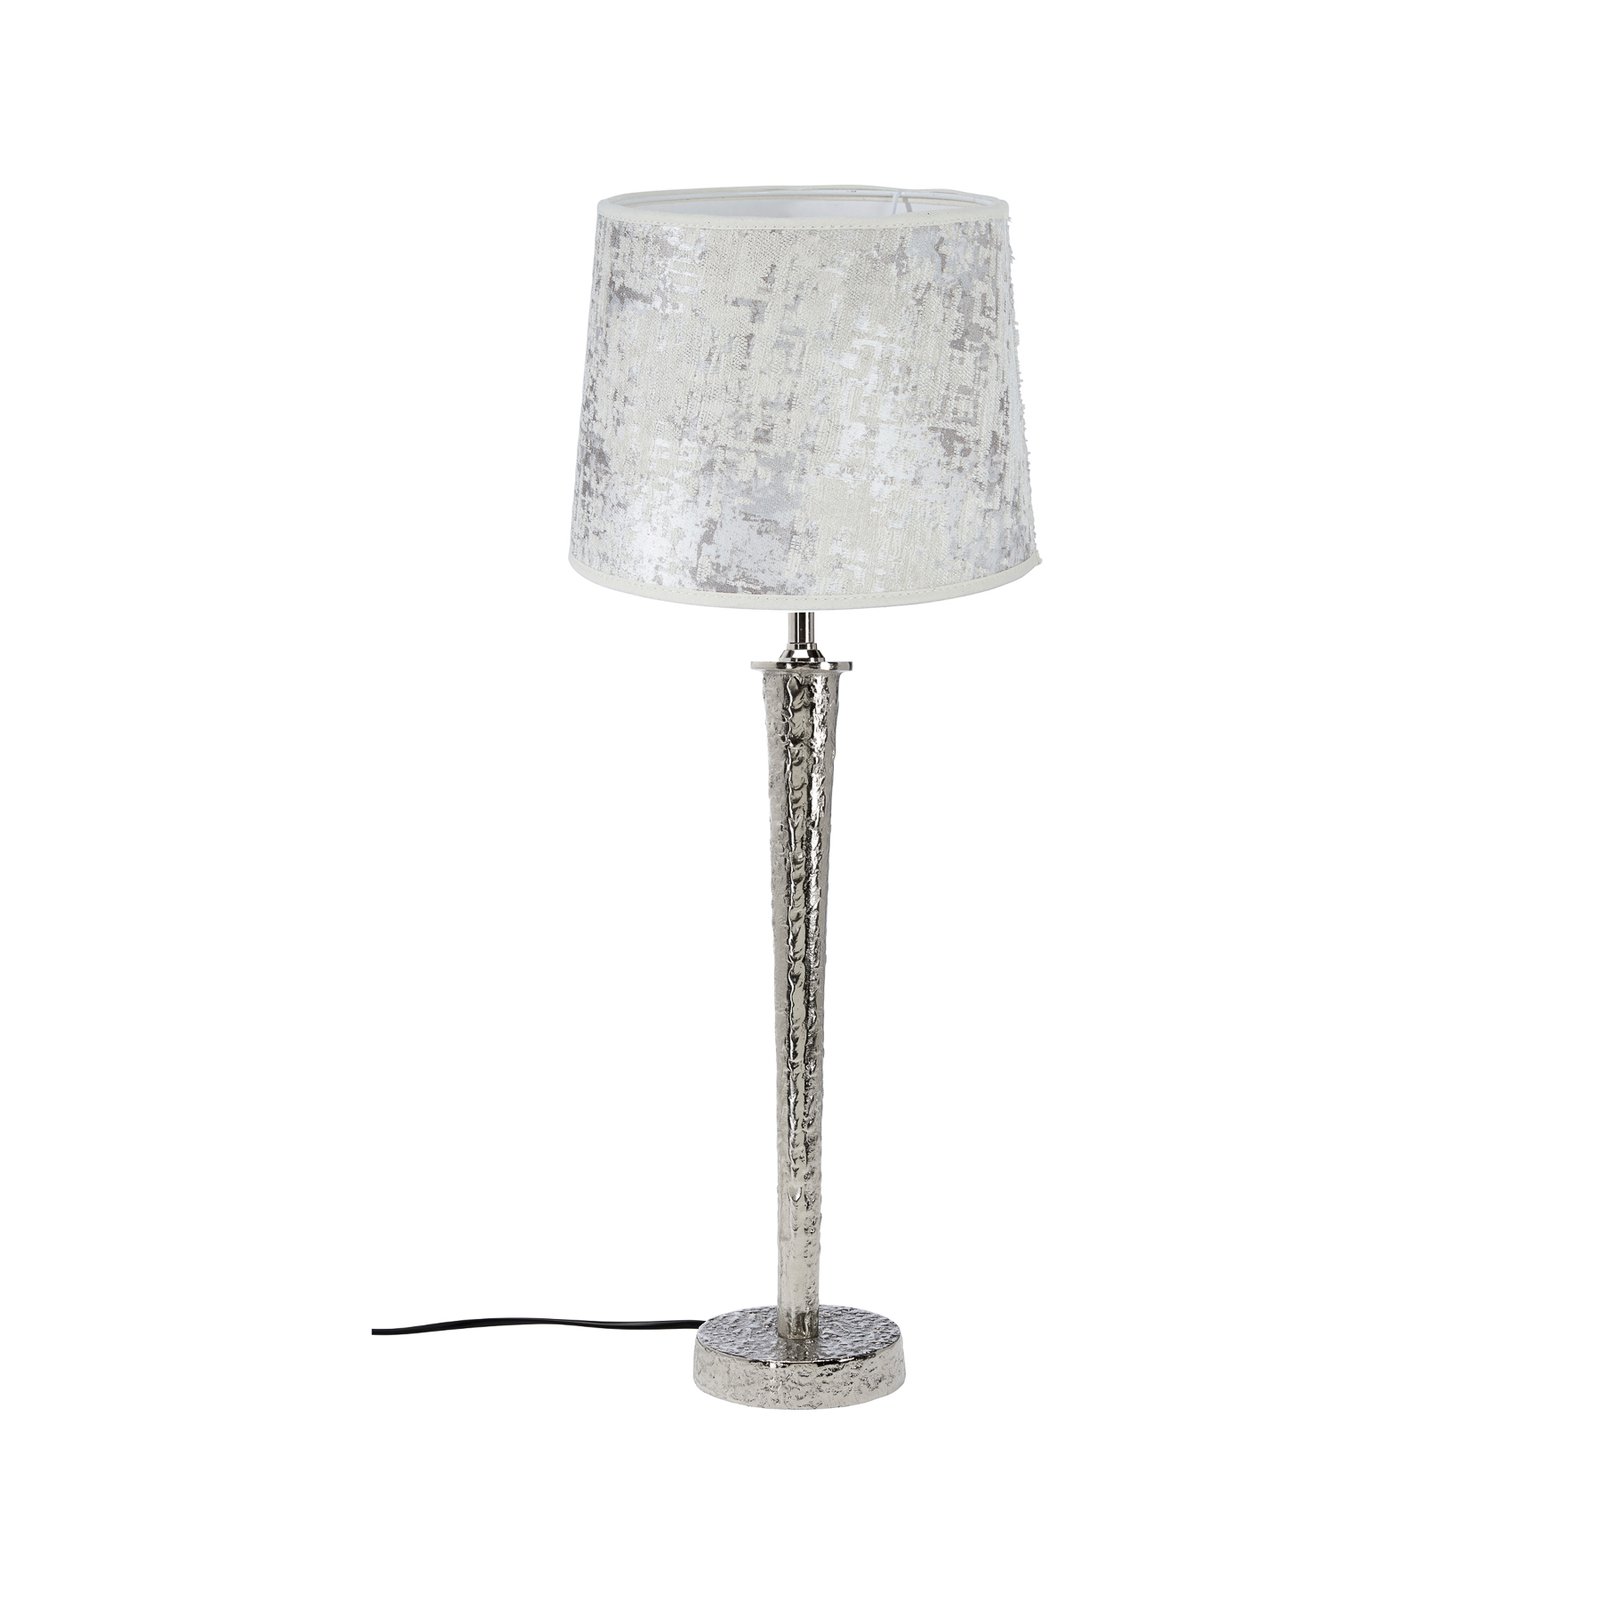 PR Home Bob table lamp, silver, Evora natural